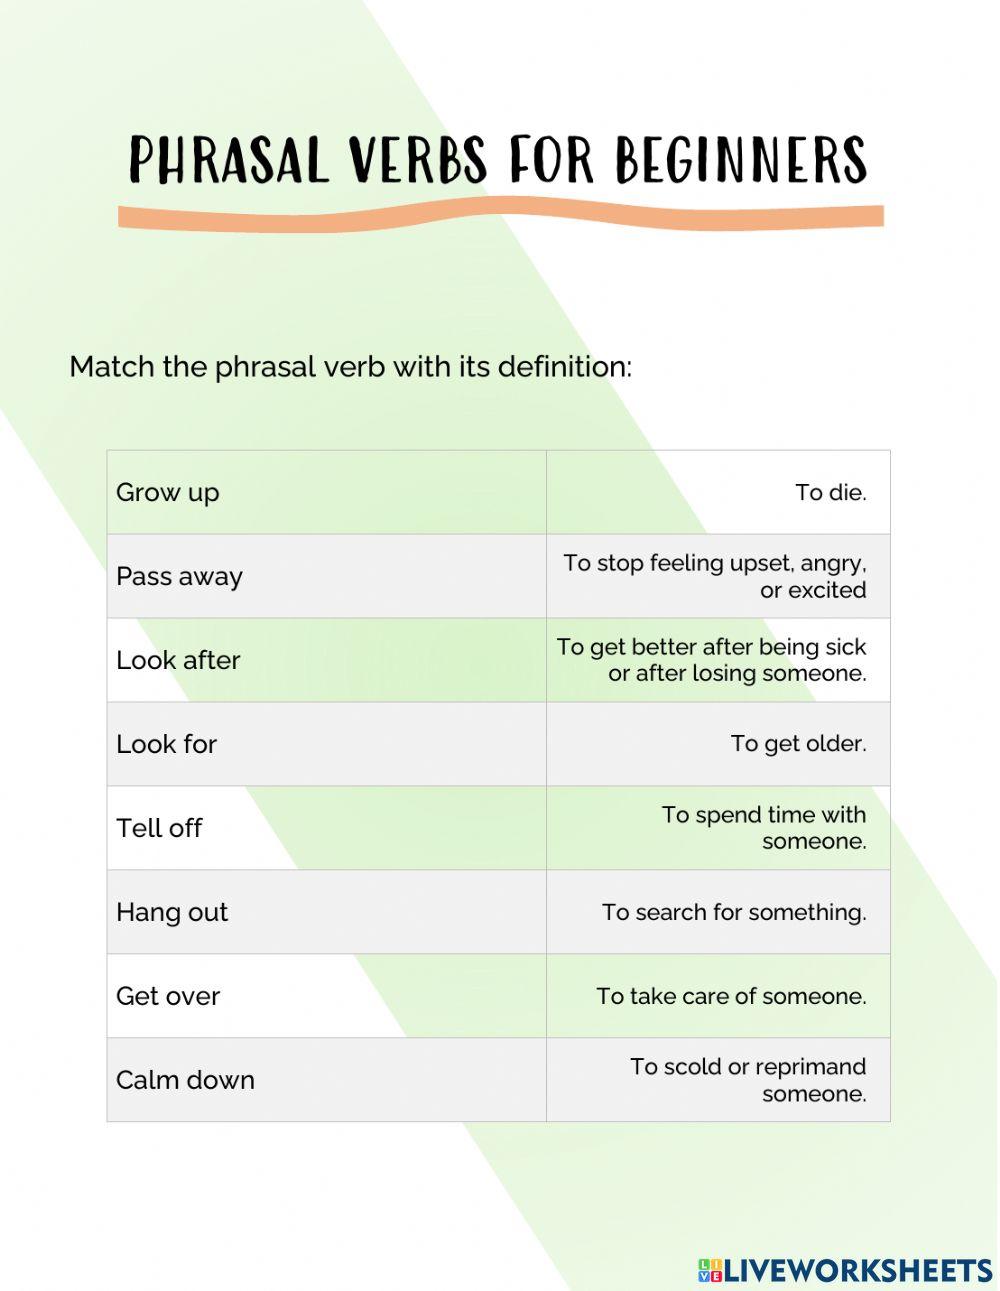 Phrasal verbs for beginners